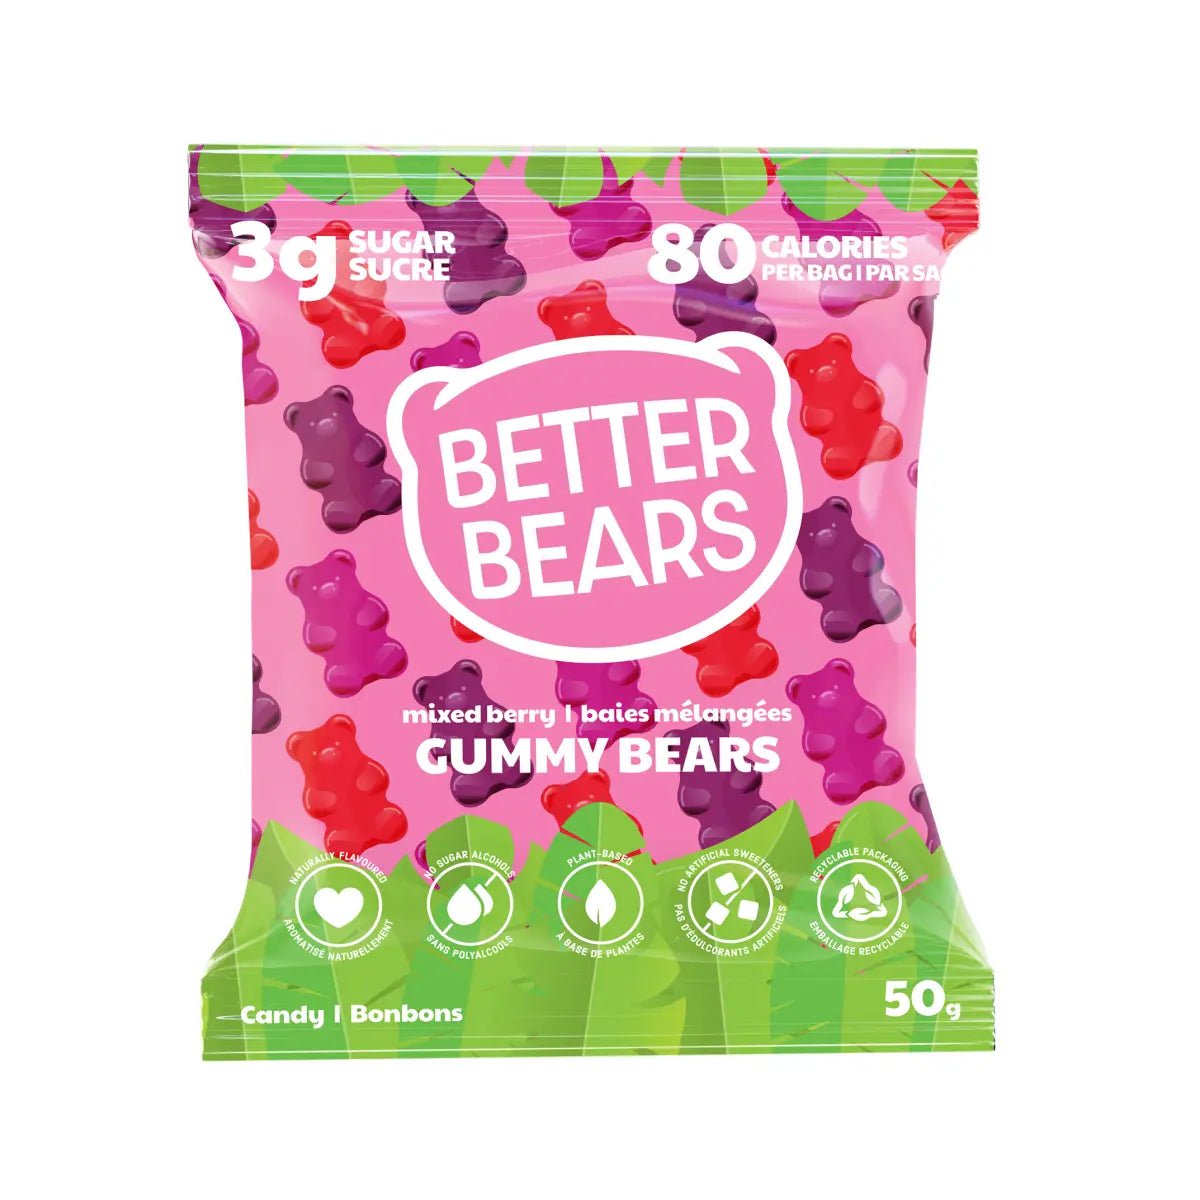 Gummy Bears - Mixed Berry